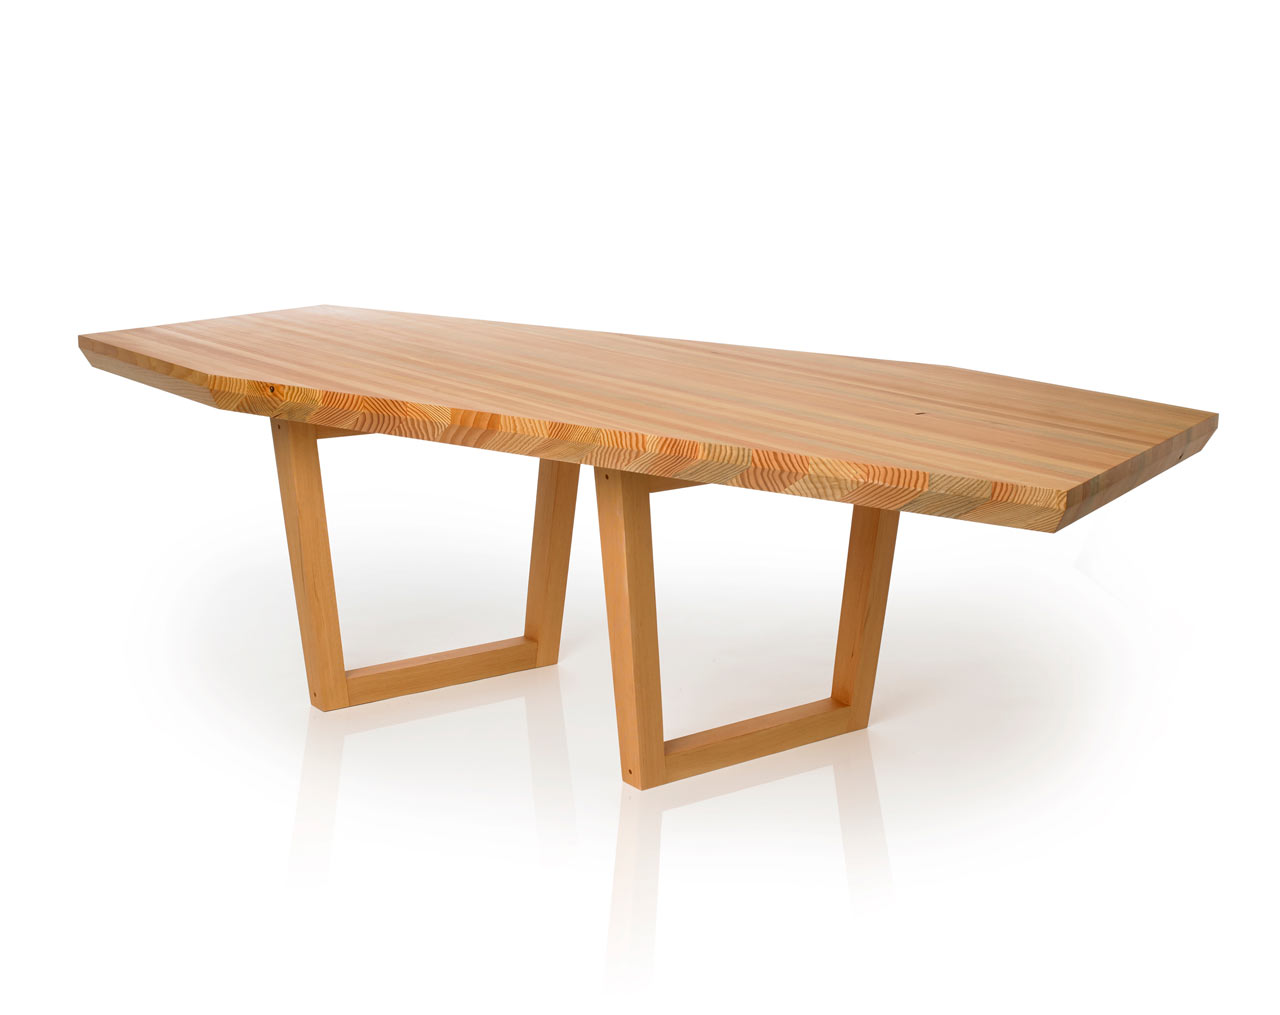 Autonomous Furniture’s Kaiwa Table Makes Sure No One Is Left Out of the Conversation